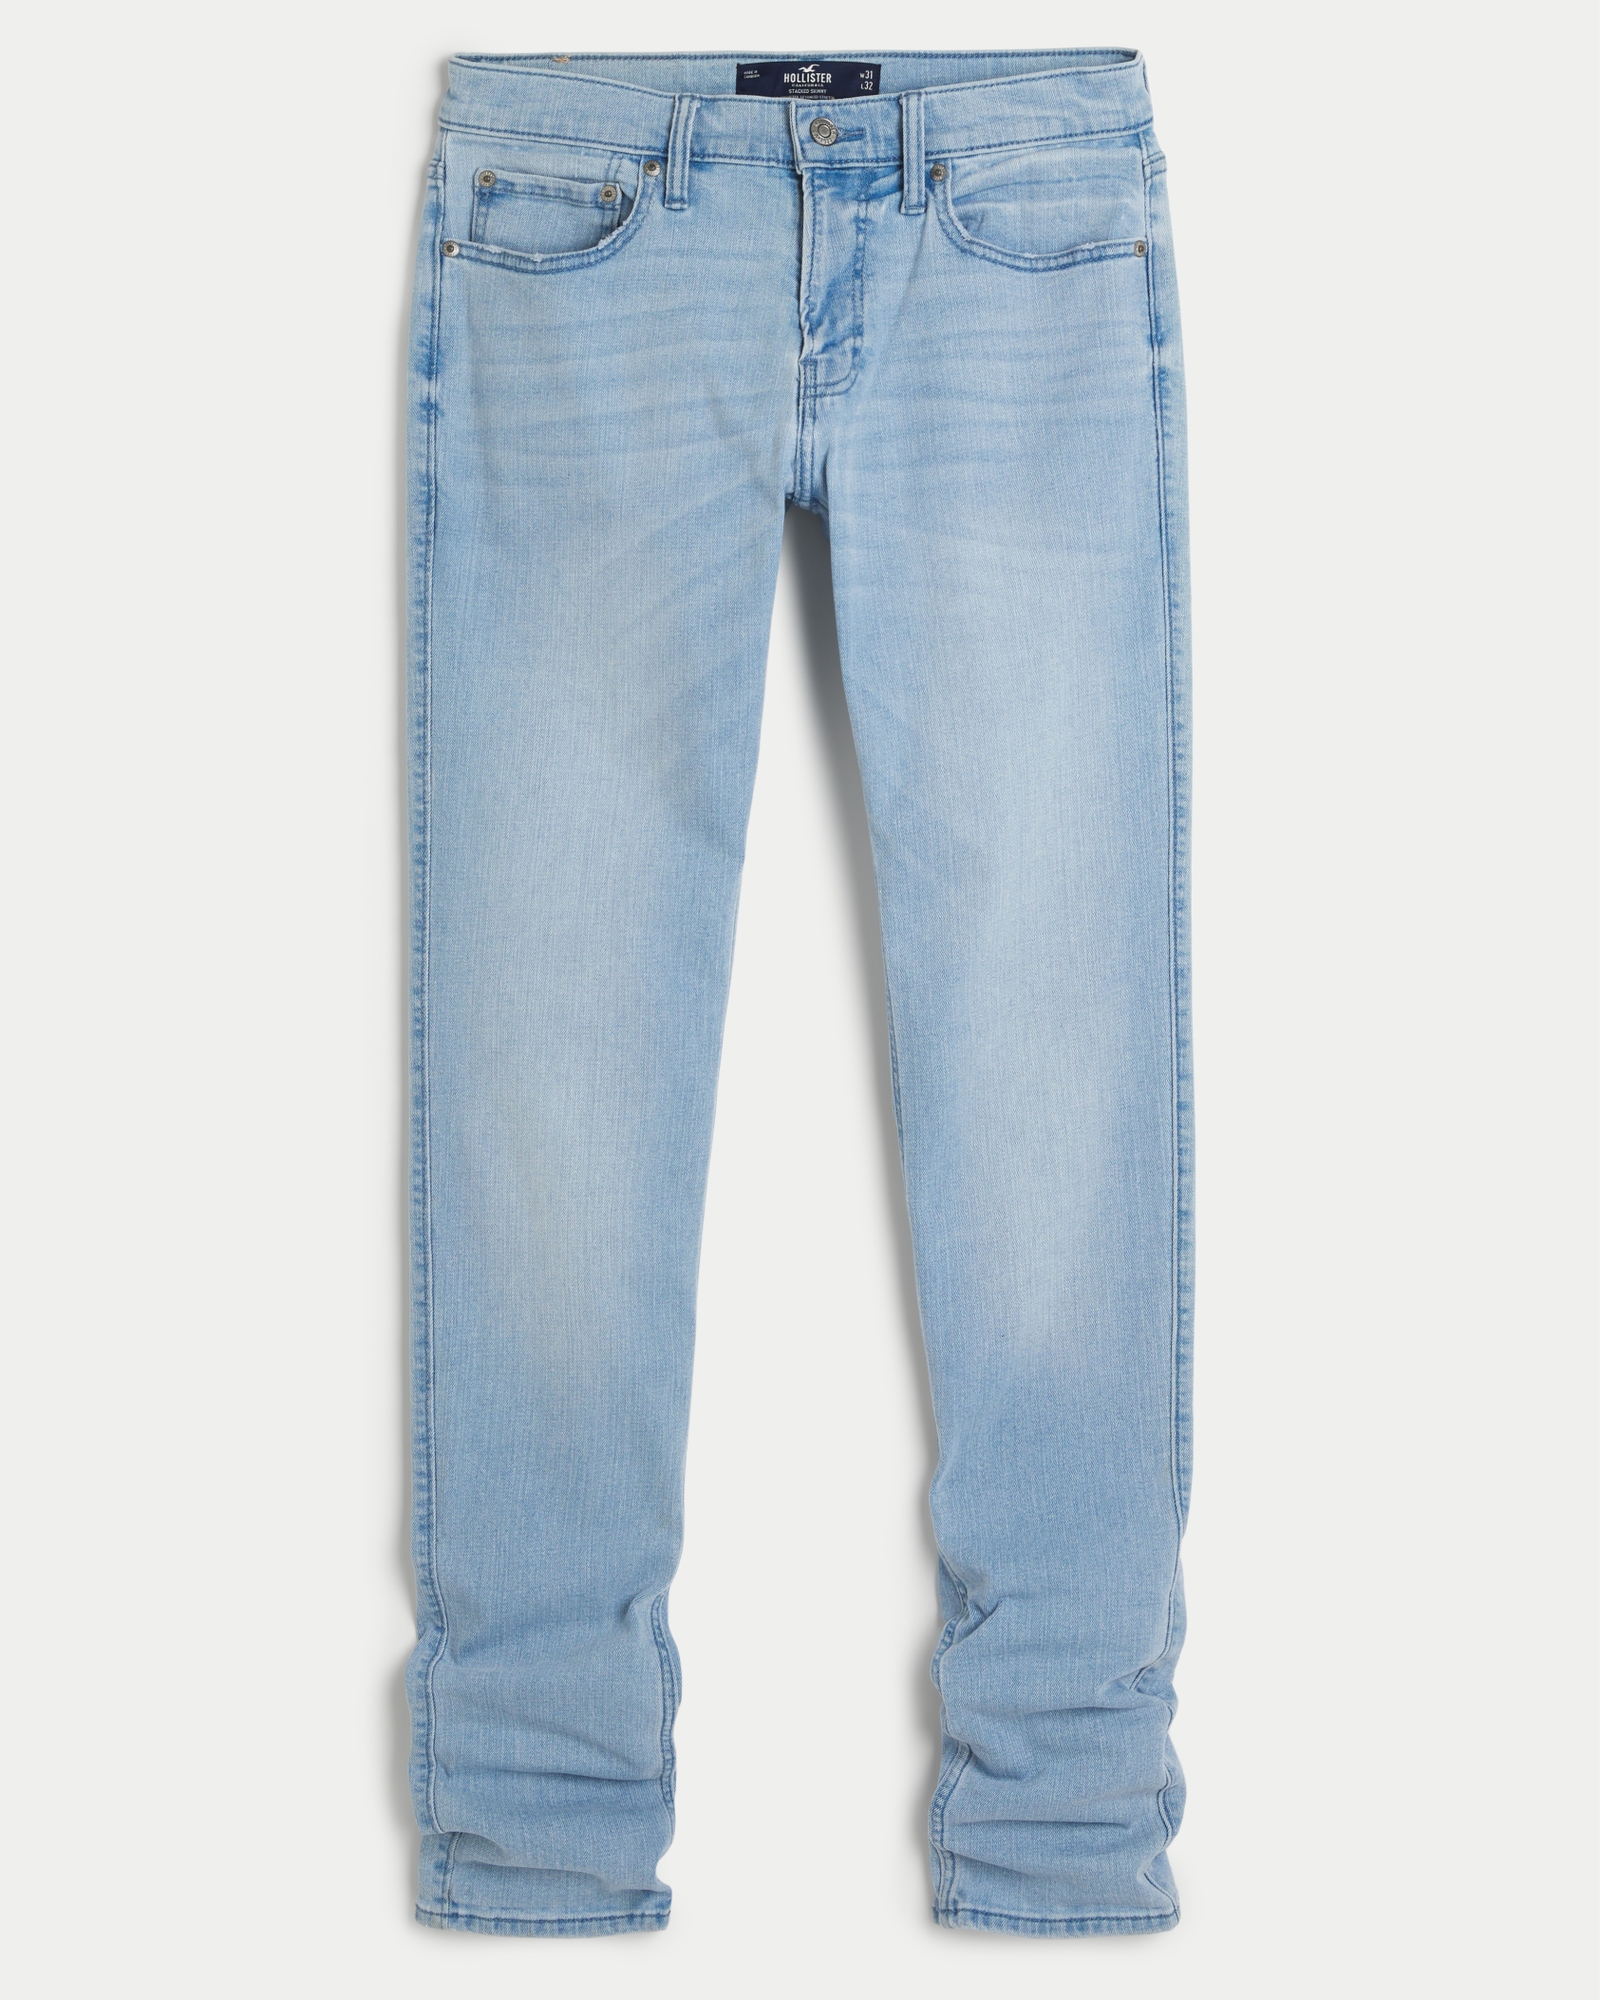 Hollister Jeans for Men, Online Sale up to 58% off